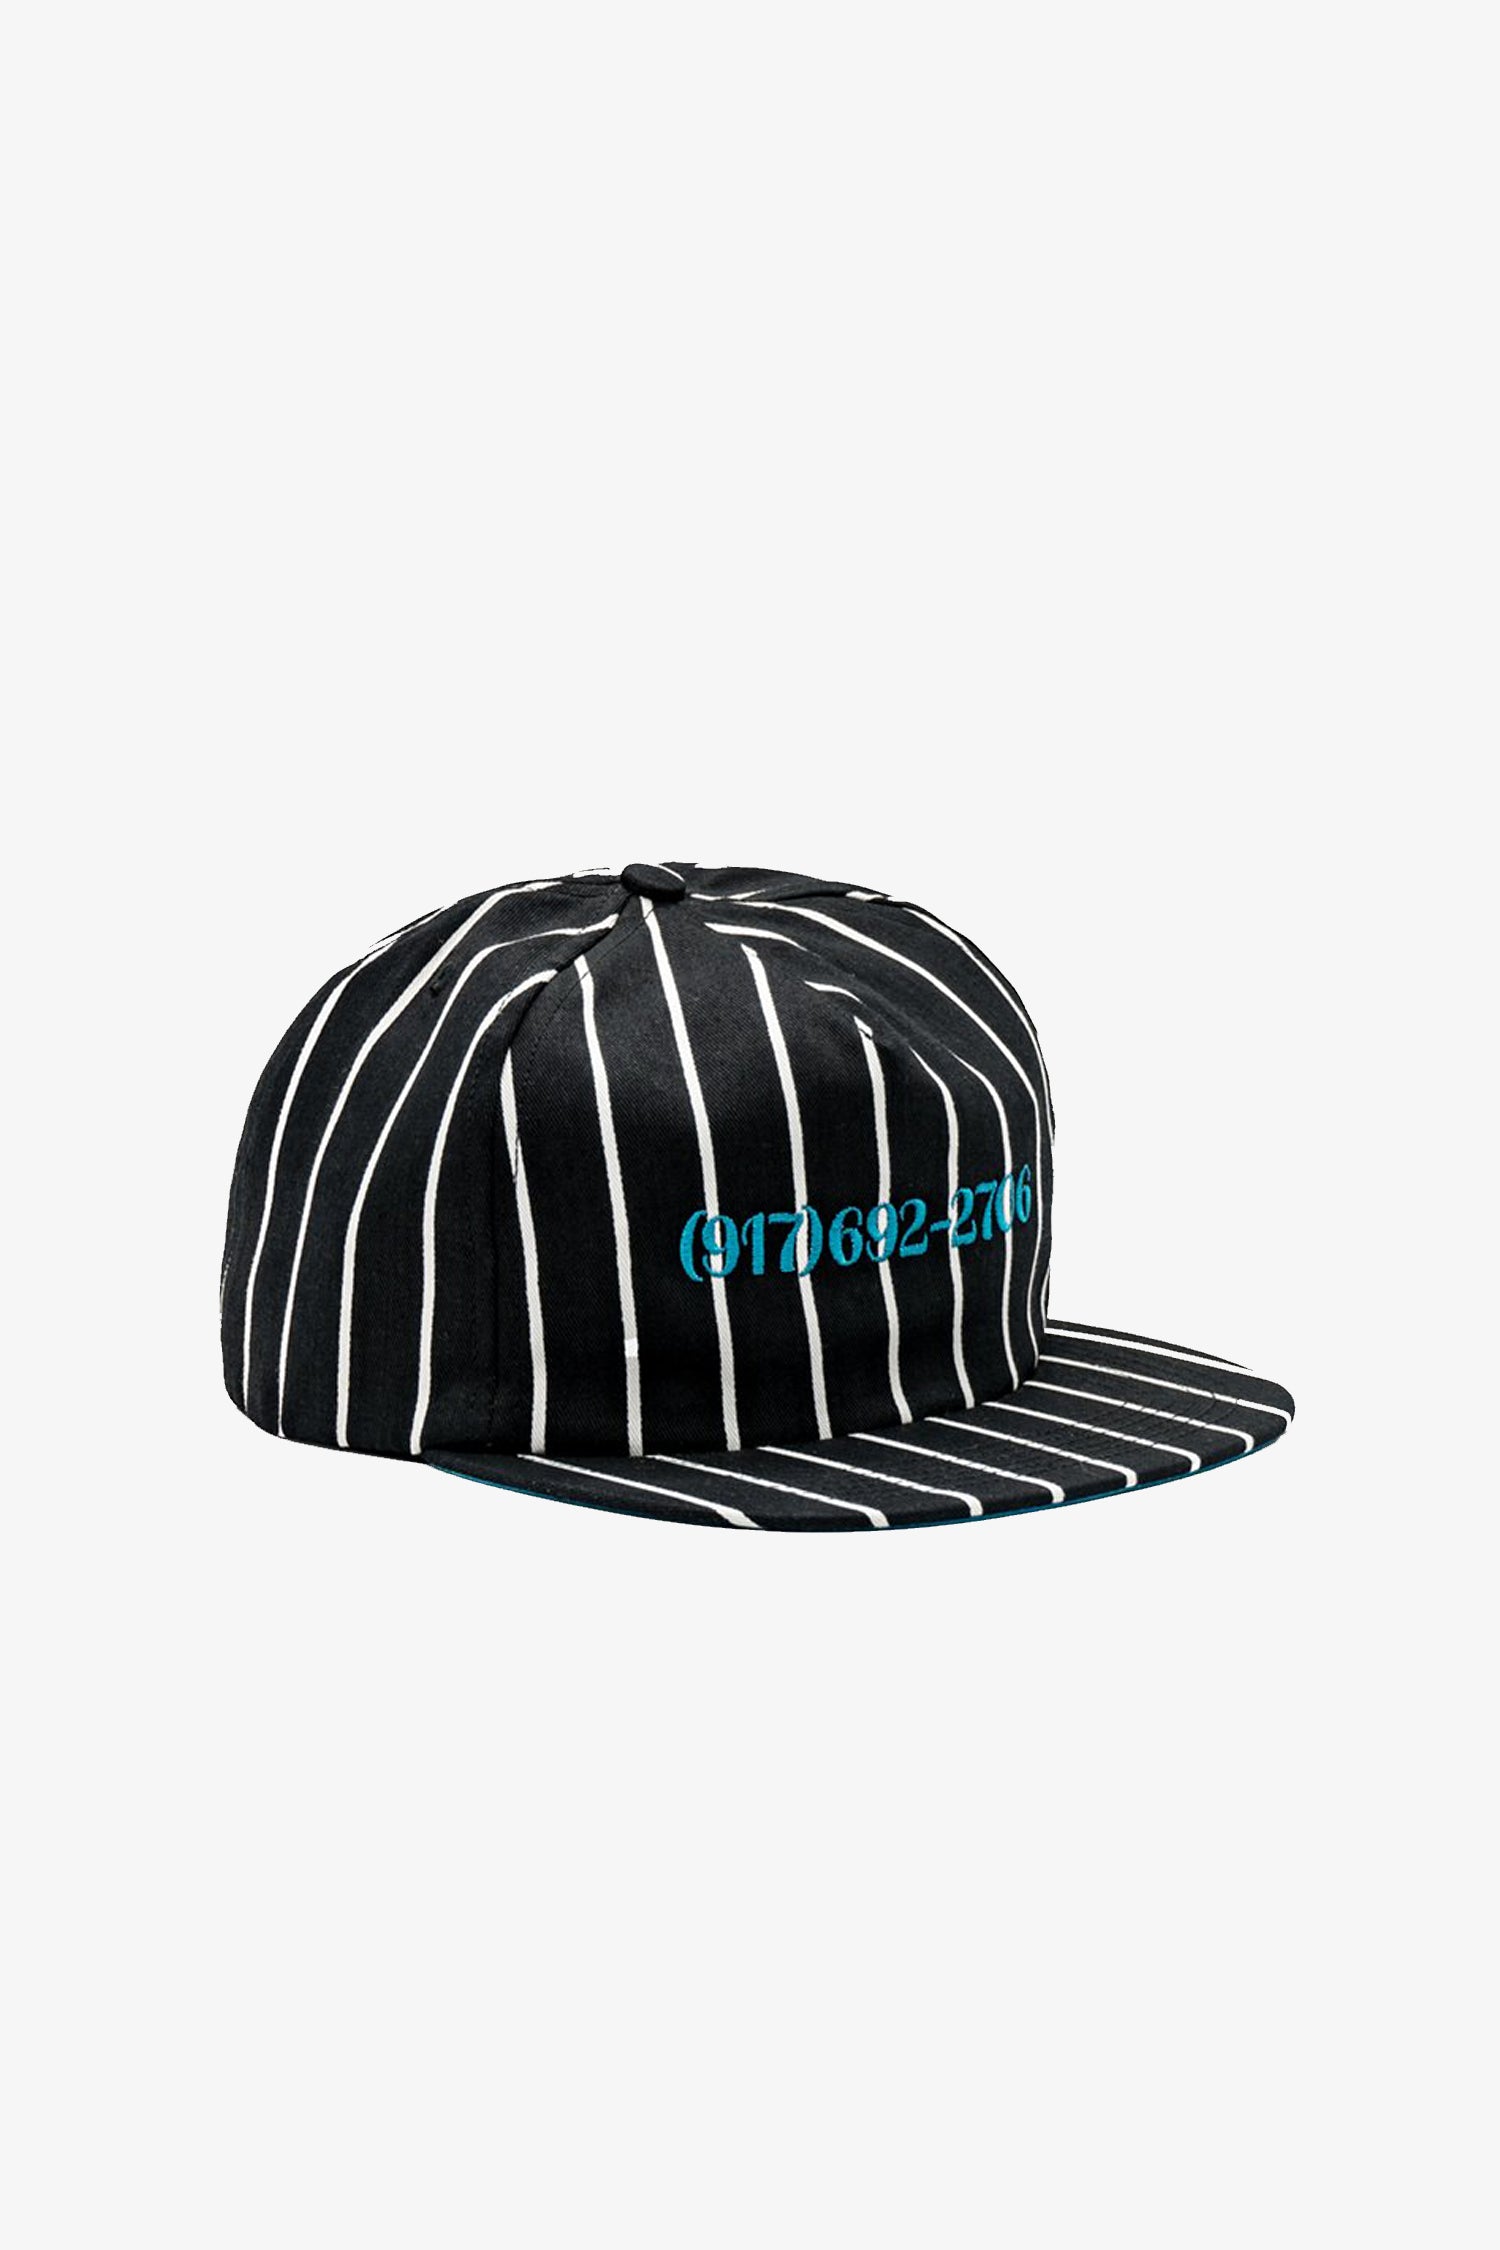 Selectshop FRAME - CALL ME 917 Dialtone Stripes Cap Headwear Dubai